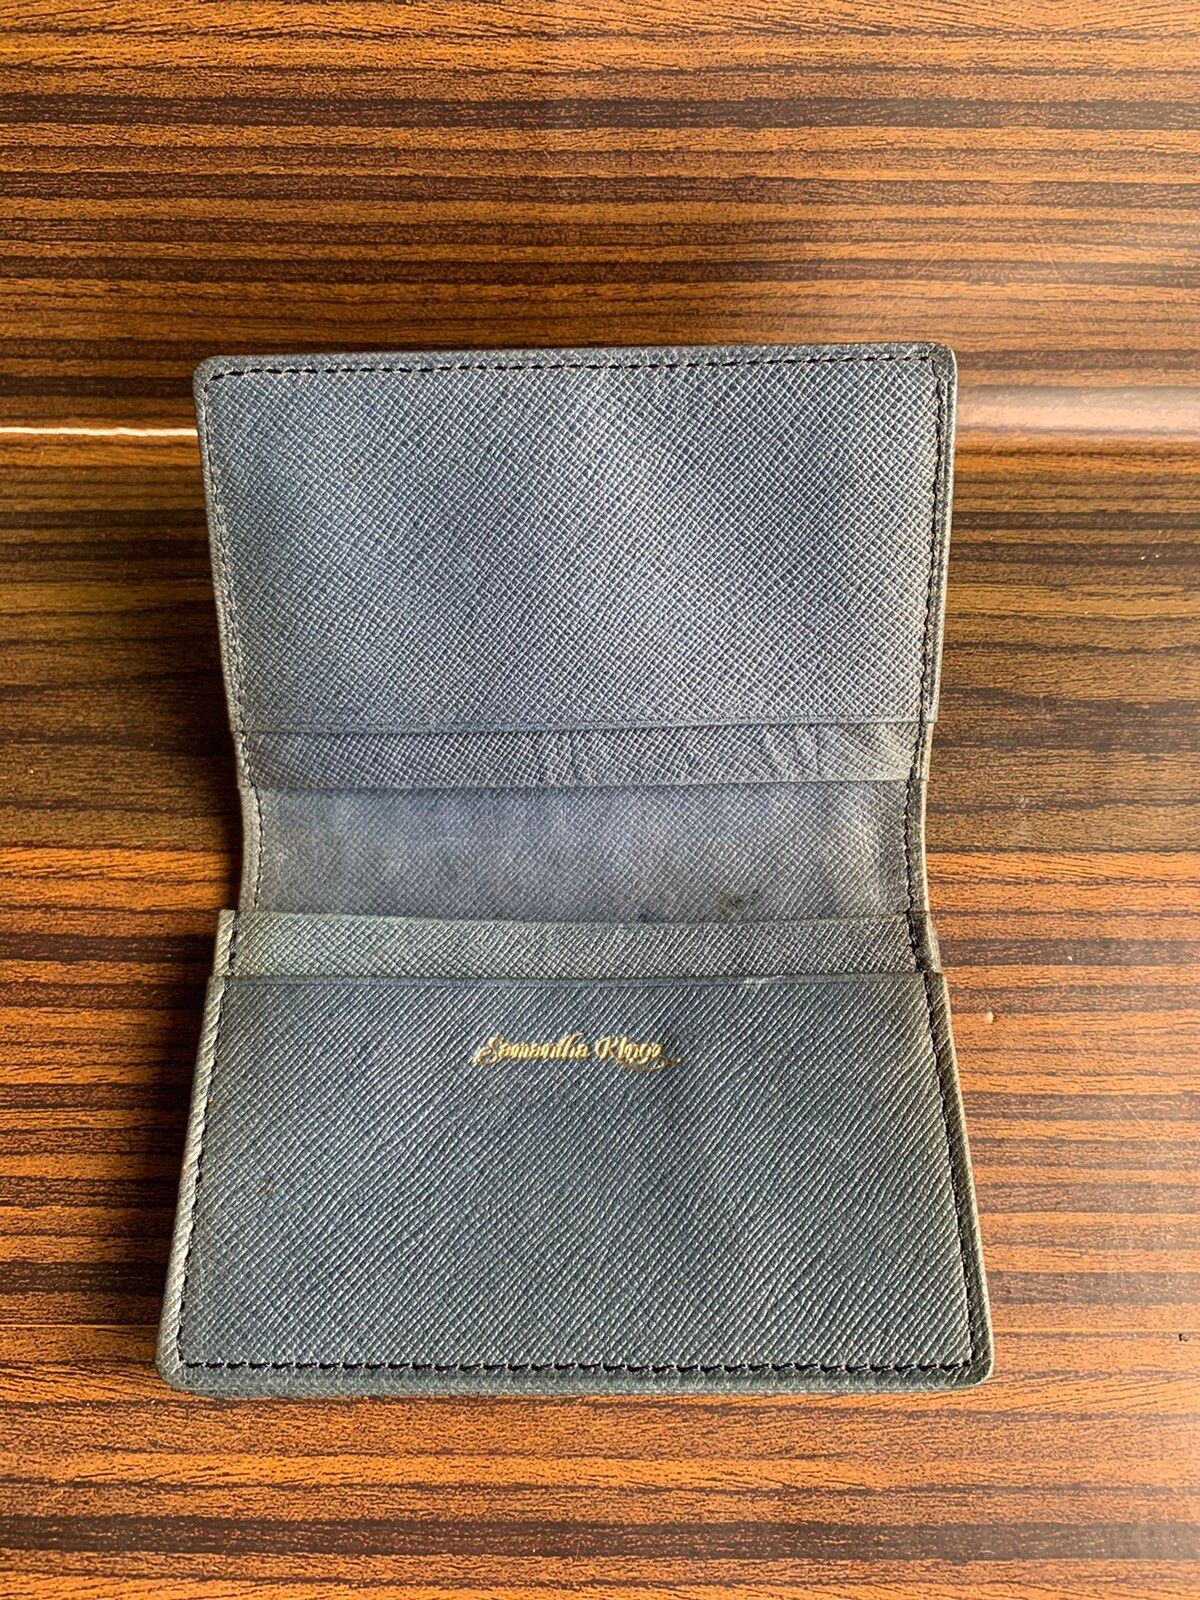 Vintage - Samantha kingz Leather Card Holder small Wallet Bottega styl - 5